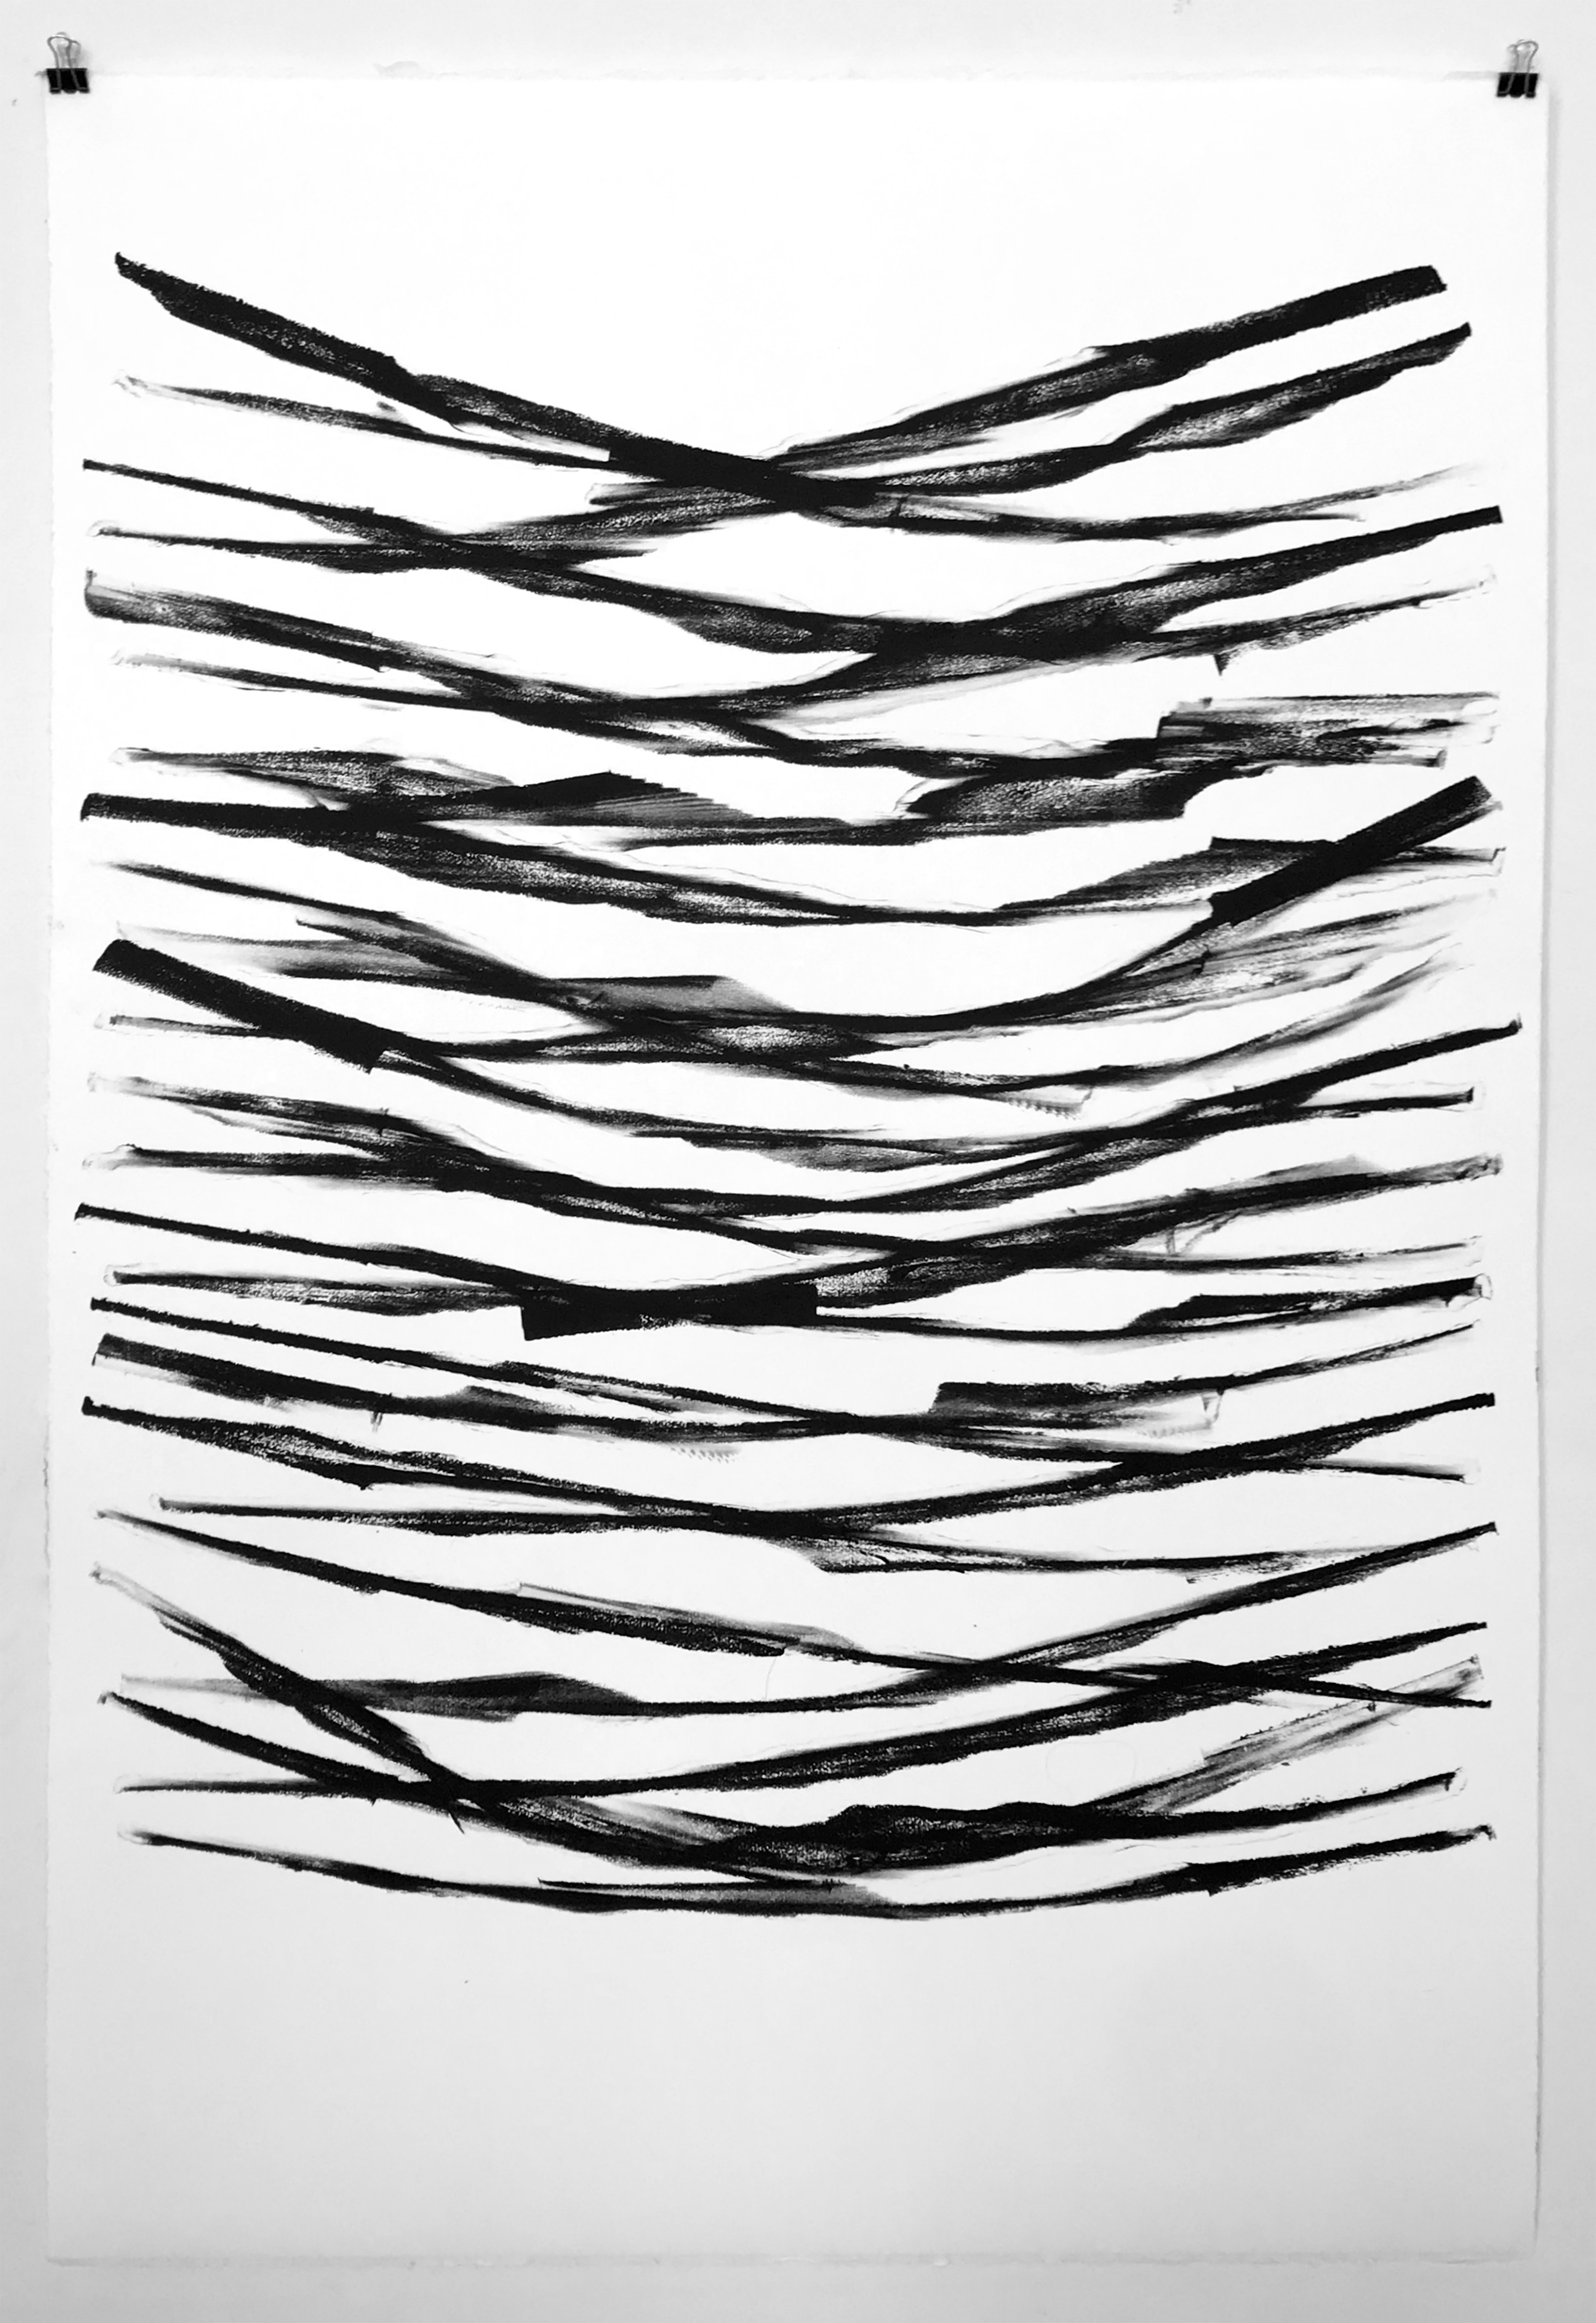  Slash Marks, 2019, Litho ink on paper, 44 x 30 inches (unframed) 